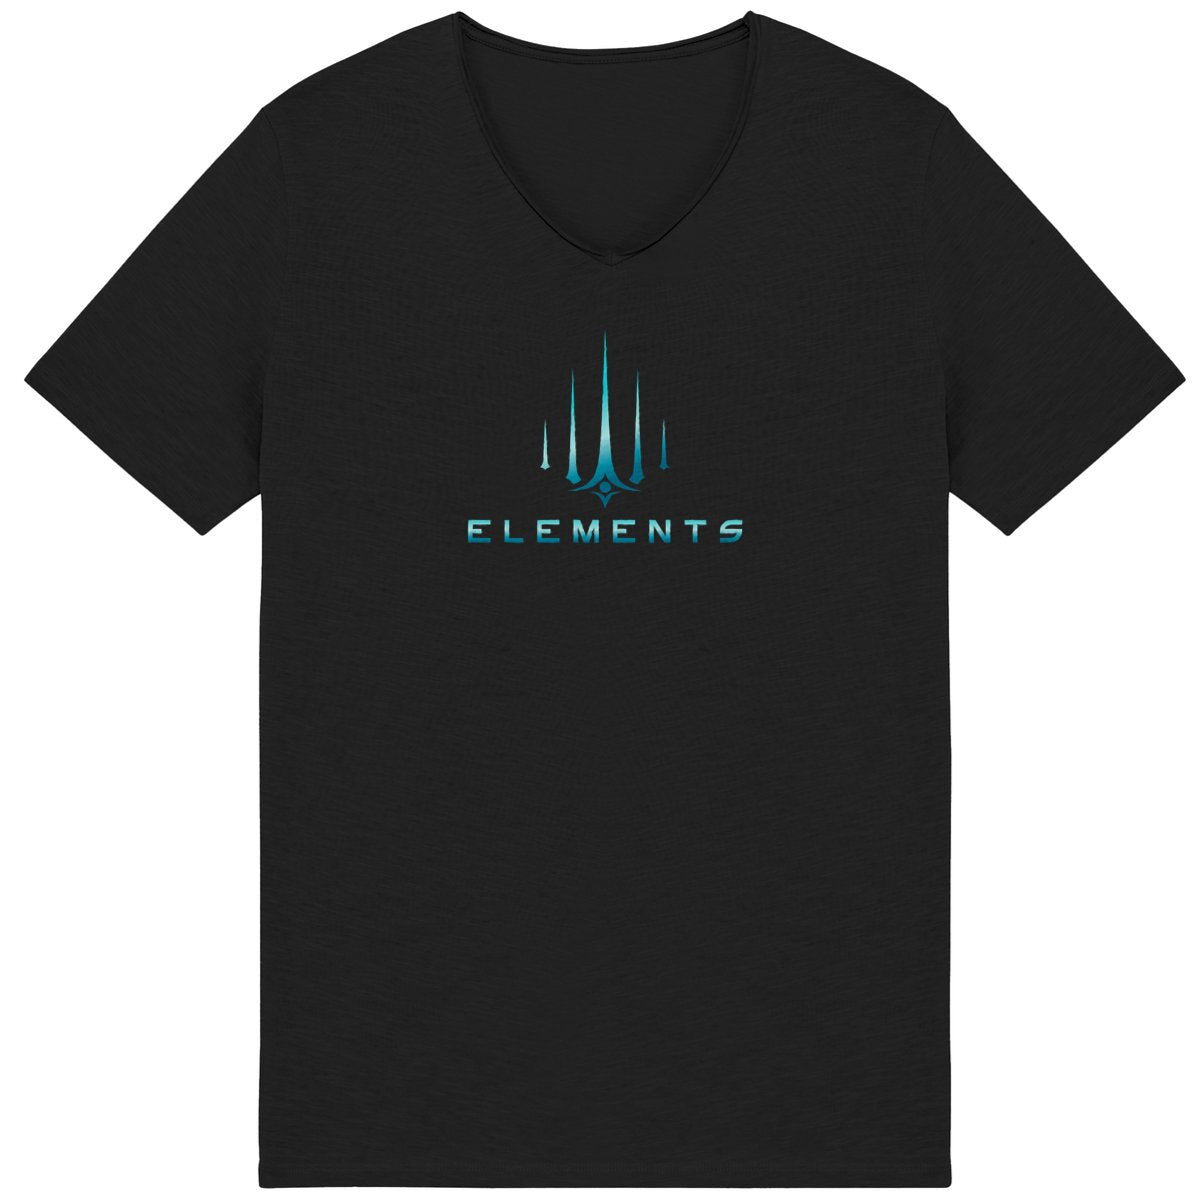 ELEMENTS - 100% organic - Slub t-shirt